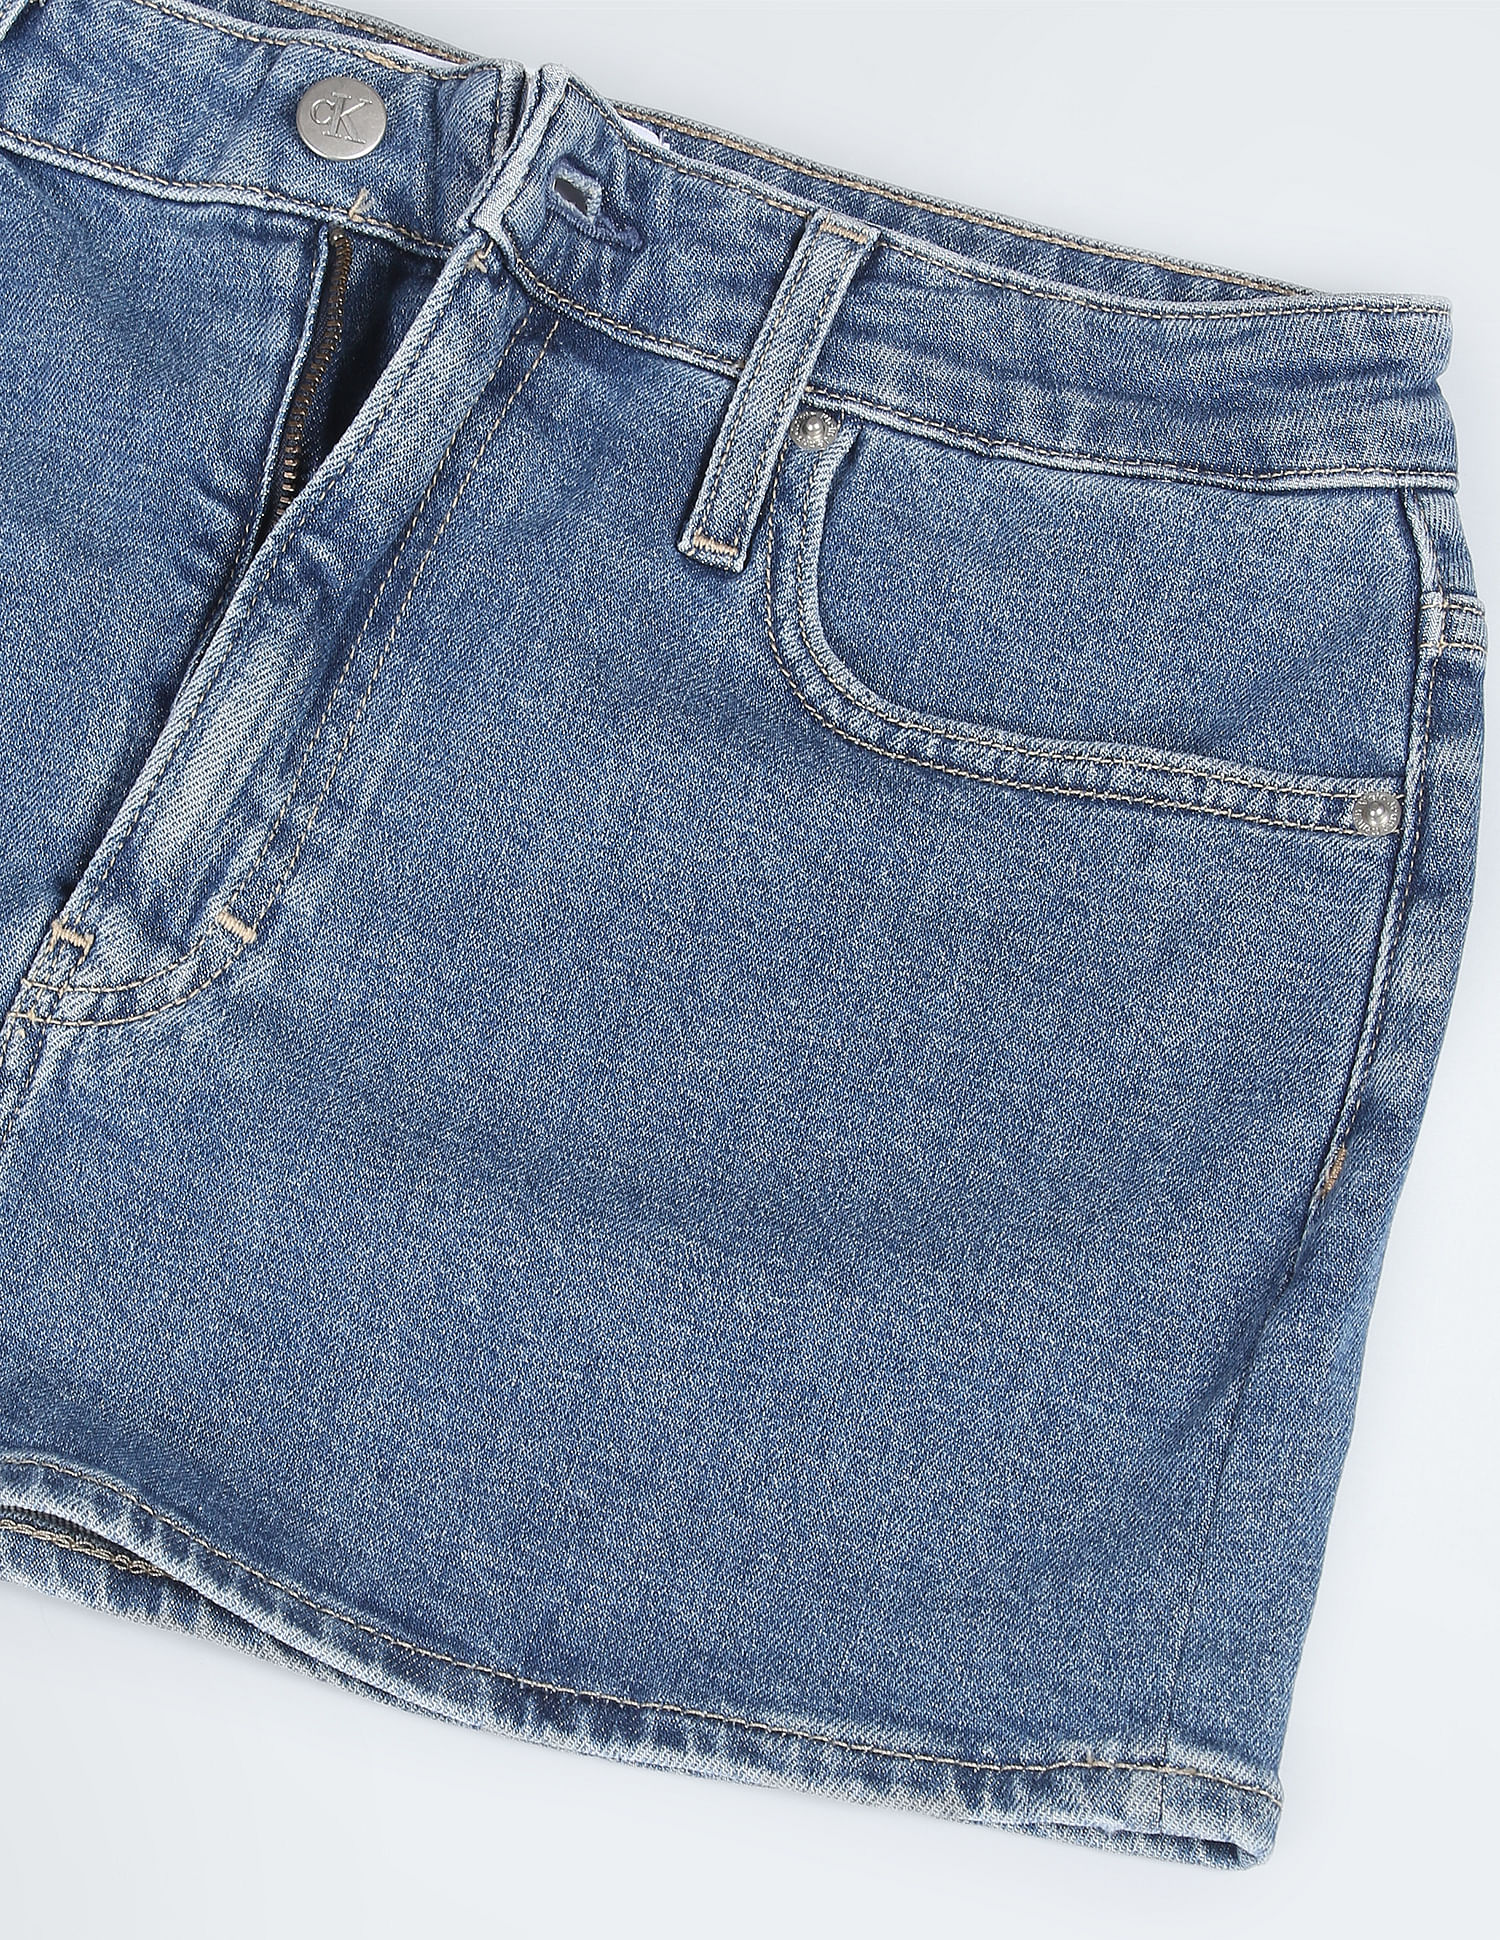 Buy Micro Mini Shorts Denim online